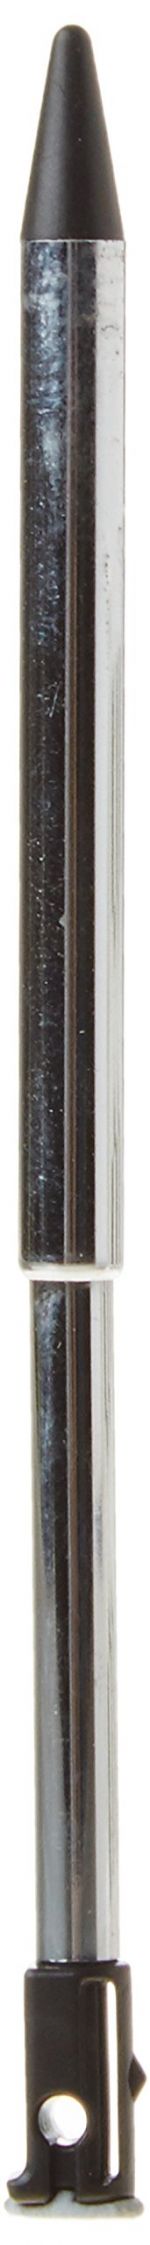 5 x Assecure black metal extendable retractable telescopic stylus slot In touch pen for Nintendo 3DS DS